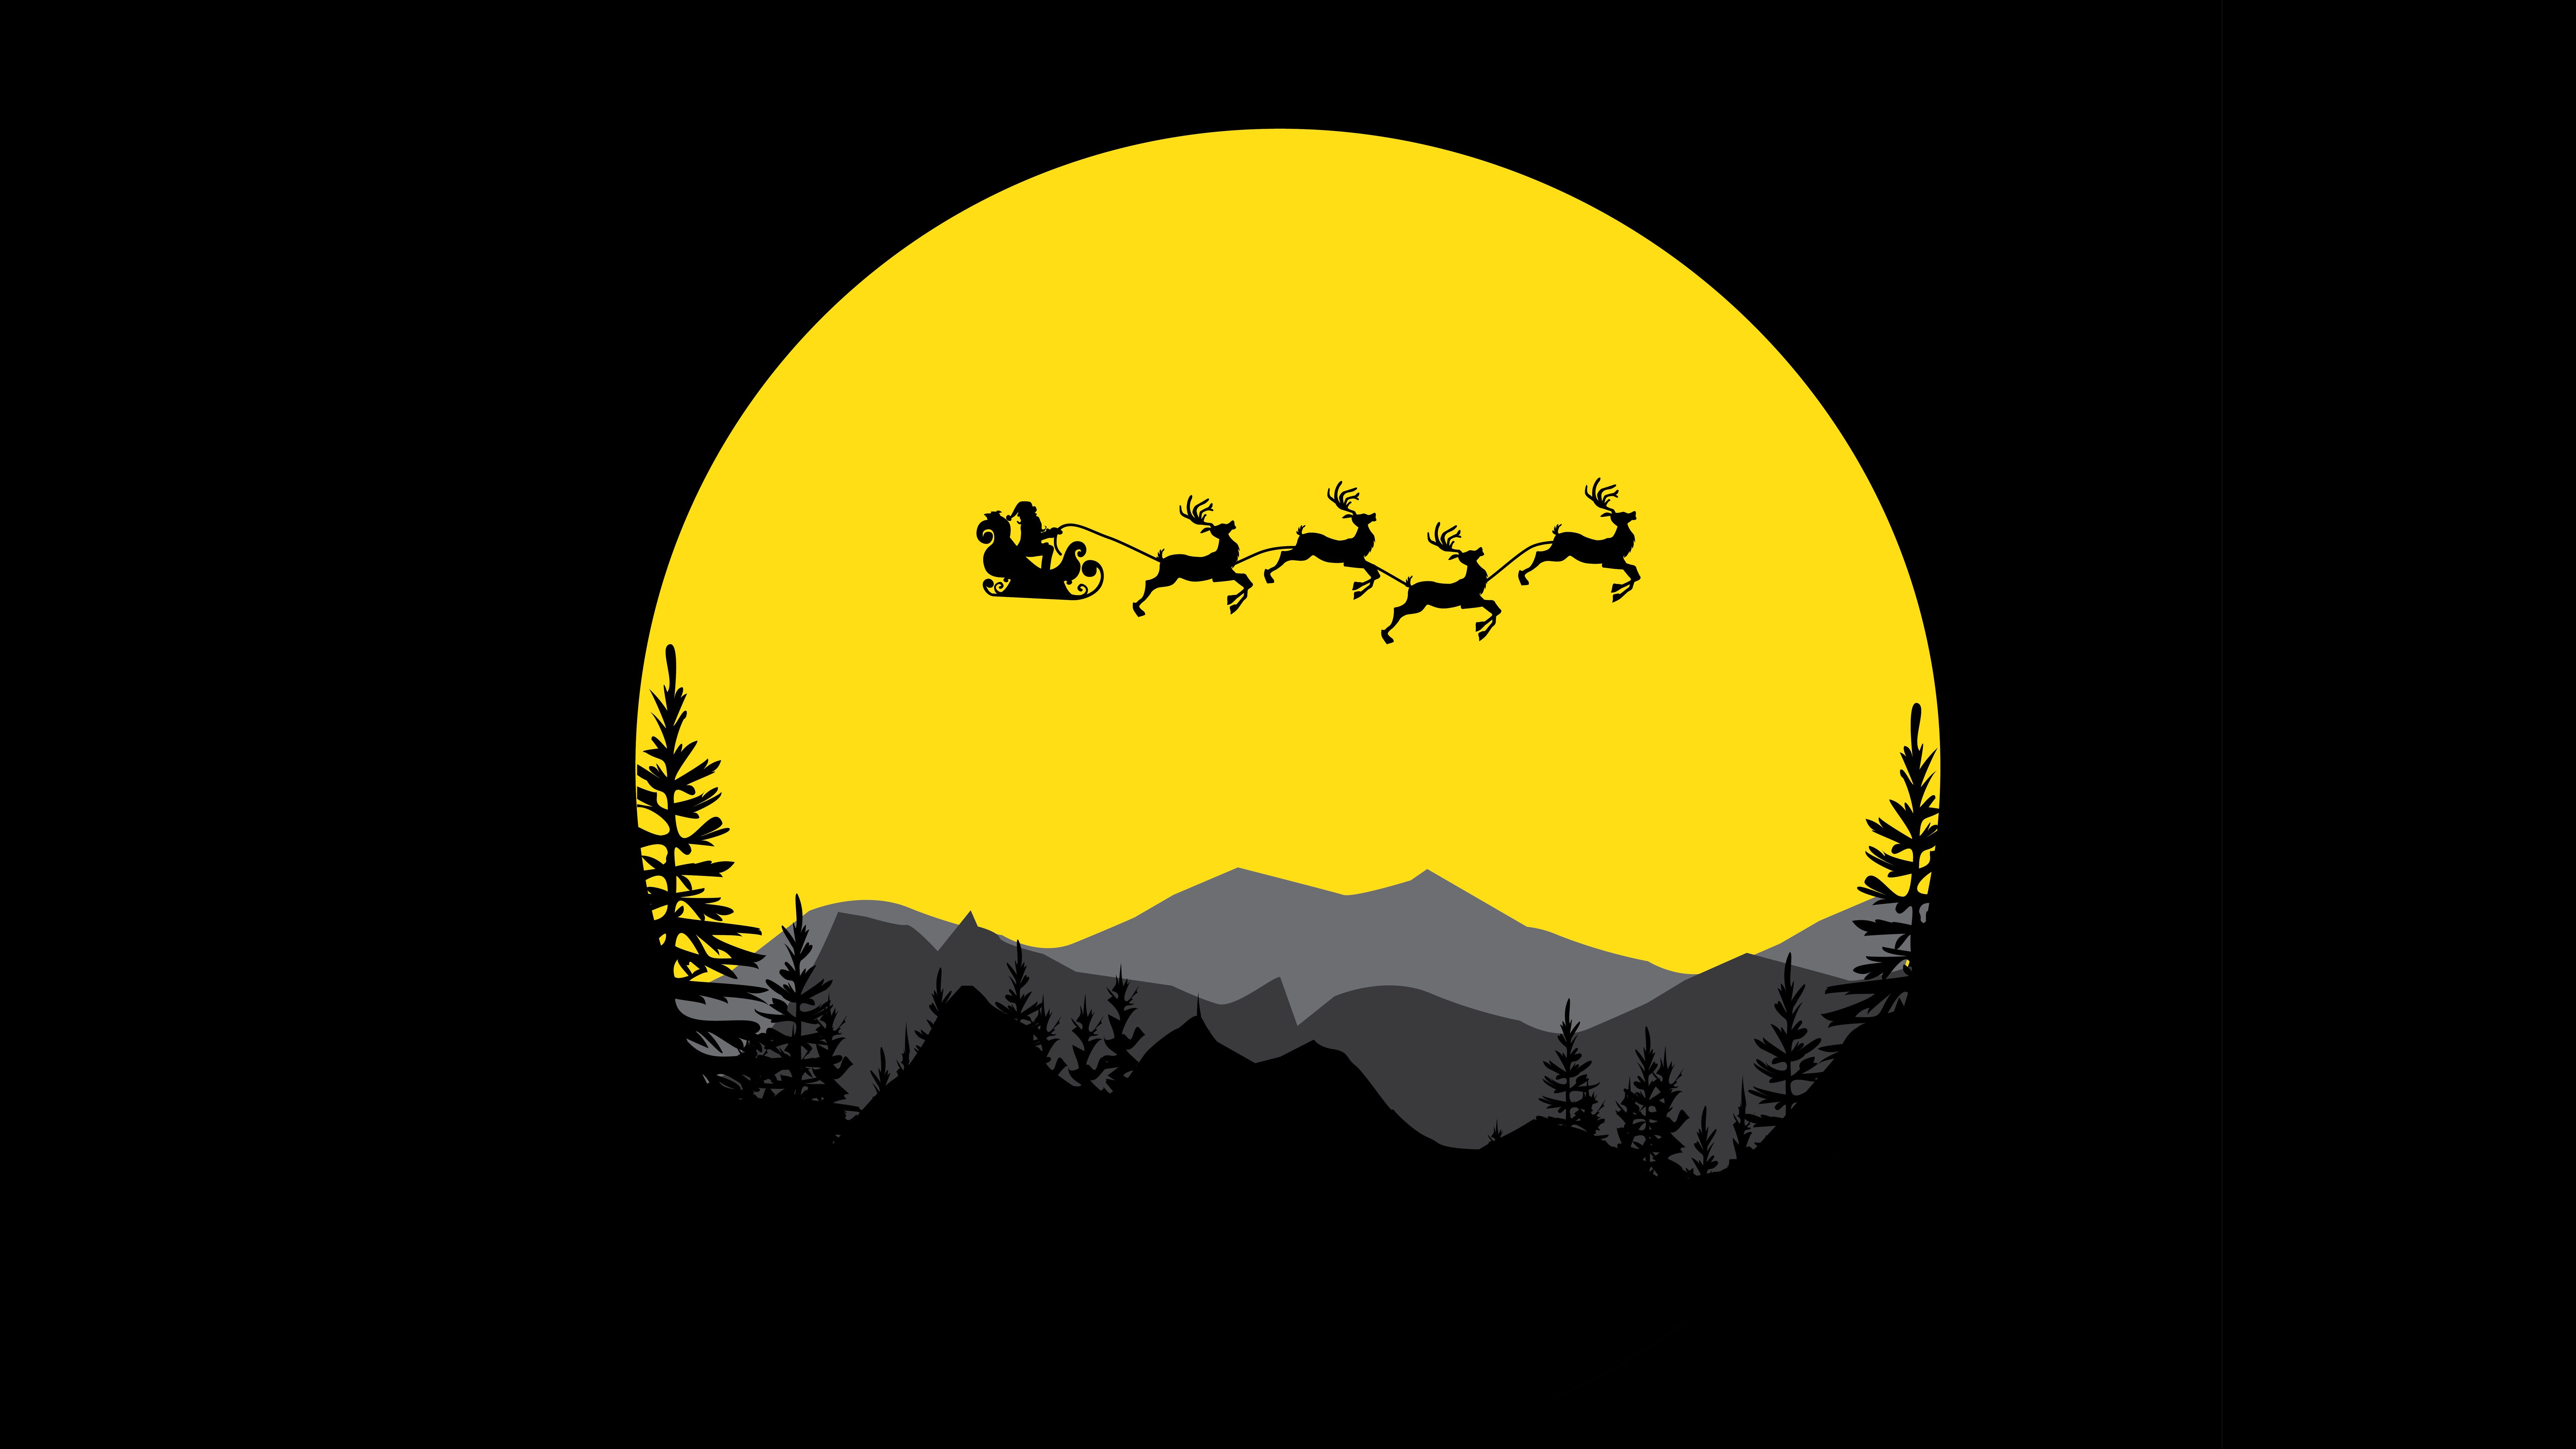 Santa Claus Moon Reindeer chariot Minimal Black 4K 8K Wallpaper